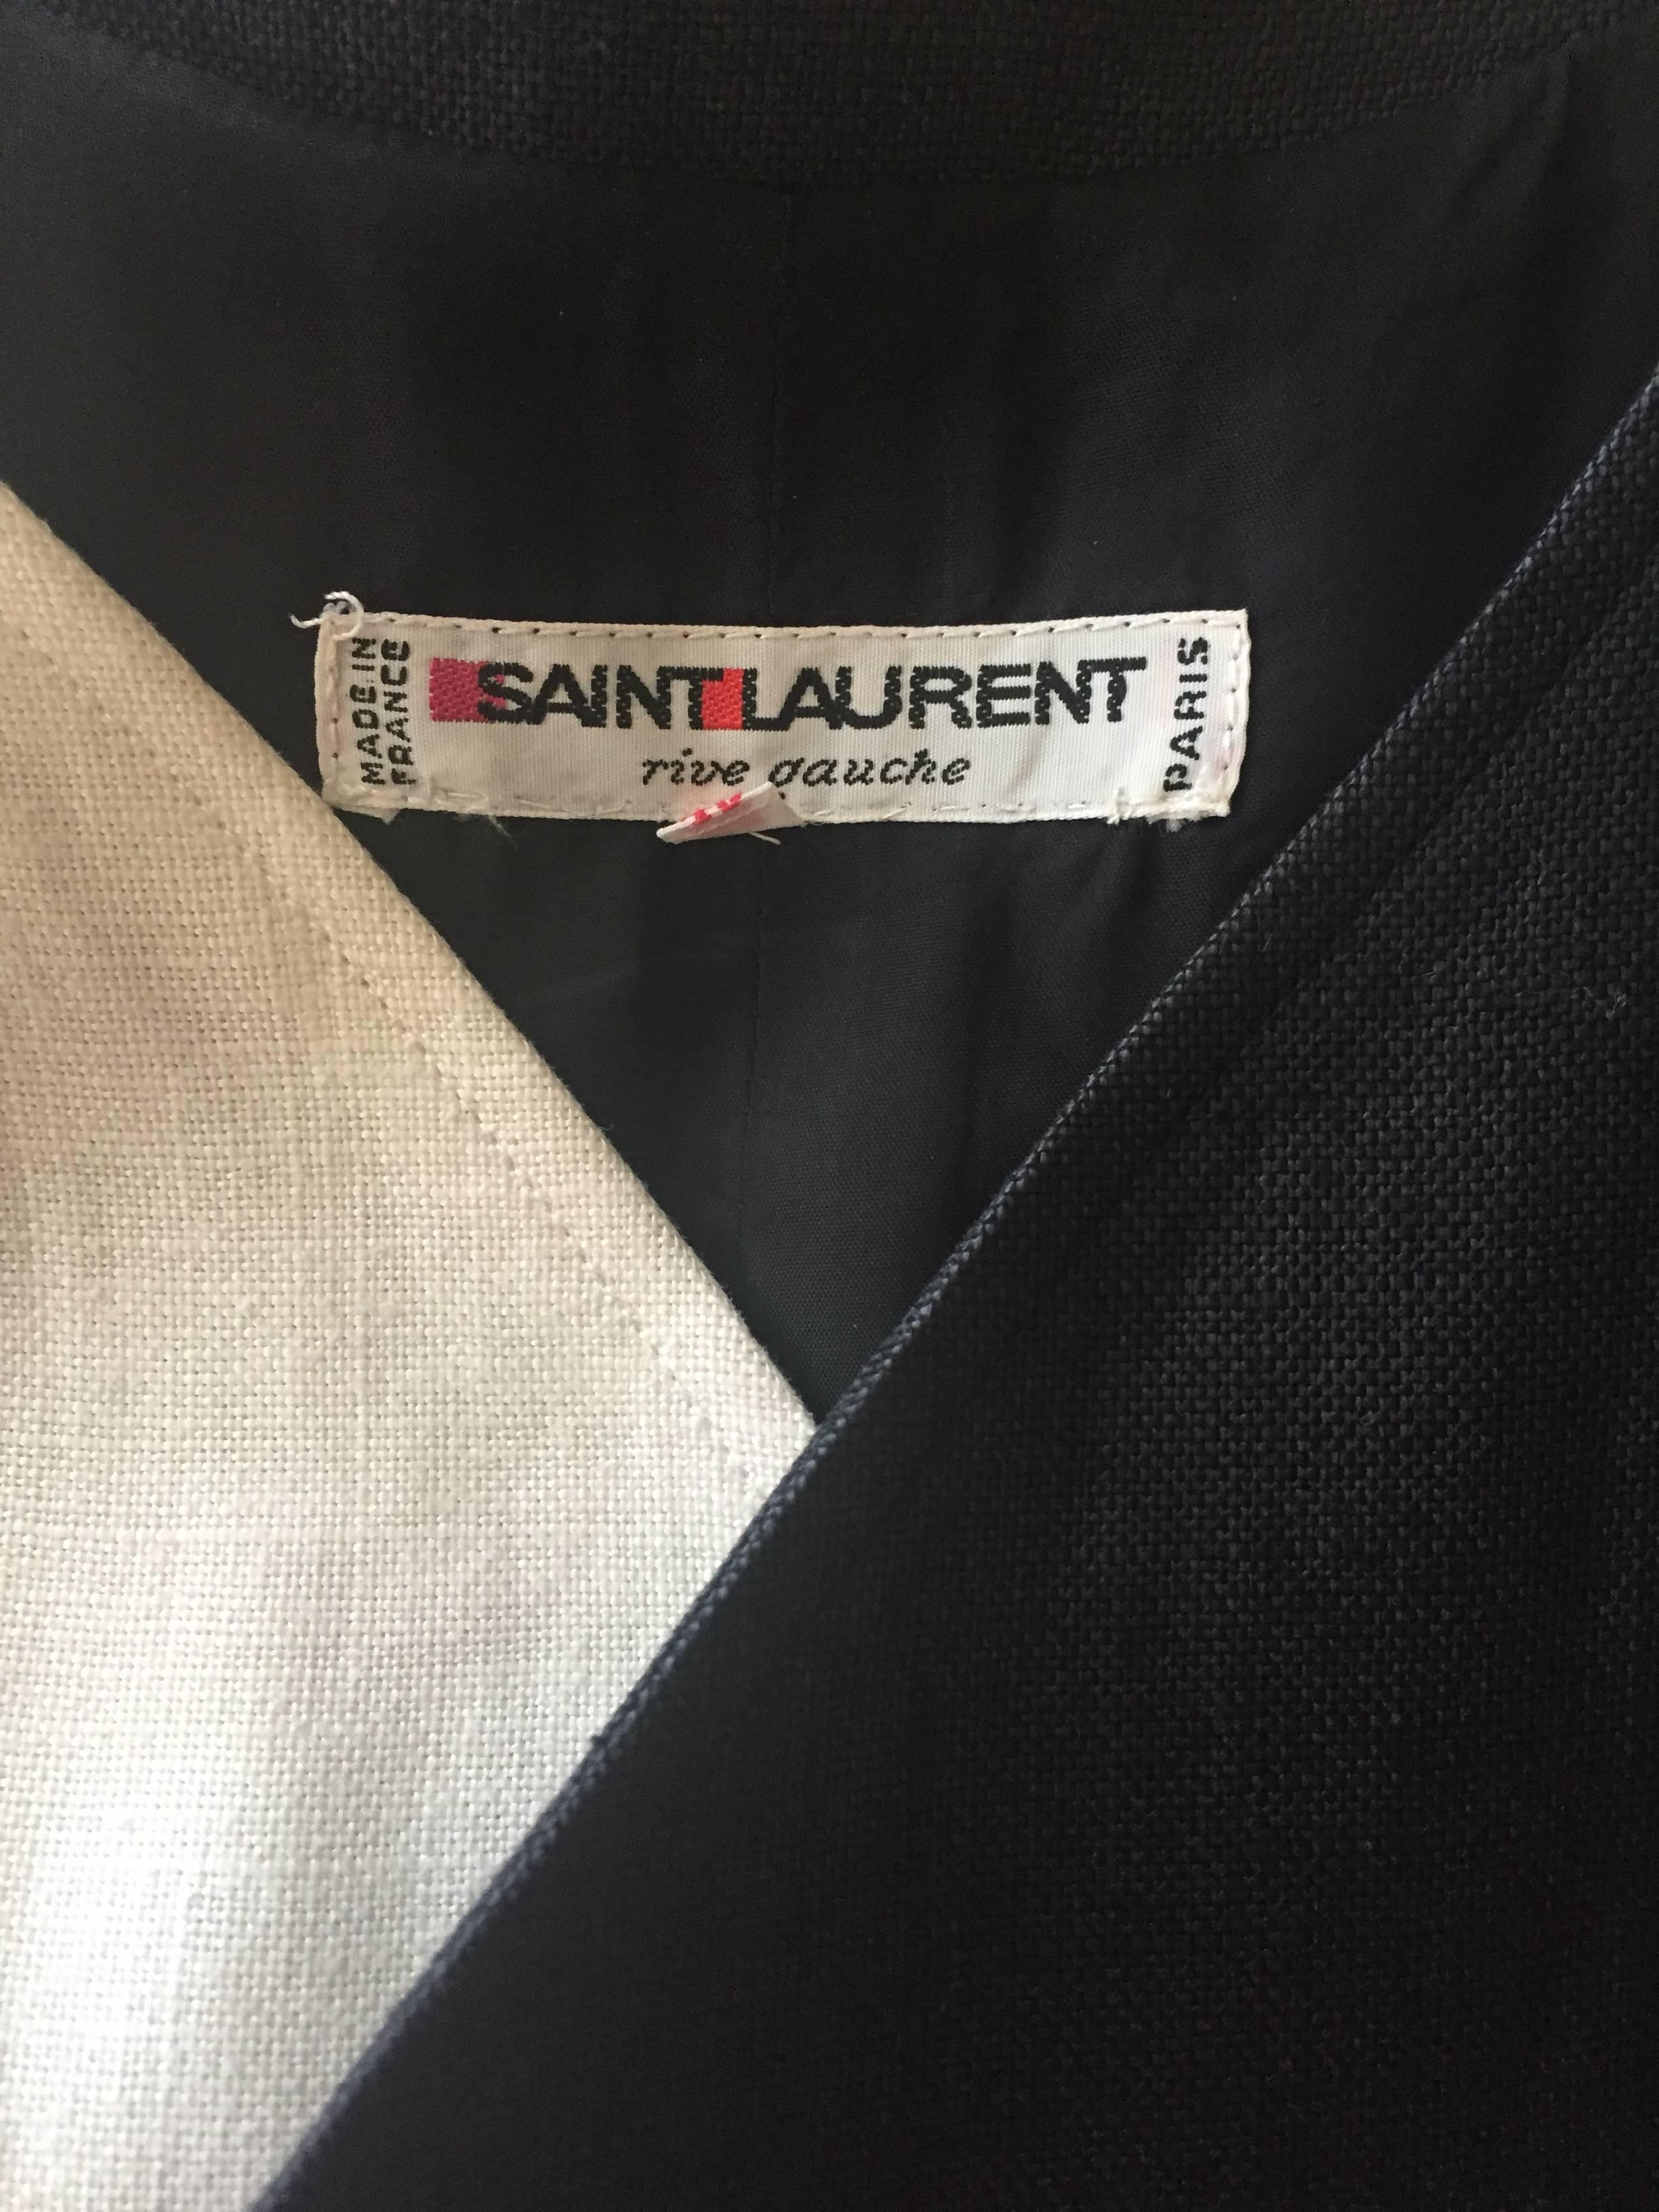 Yves Saint Laurent Rive Gauche 1970's Black and White Linen Dress 4